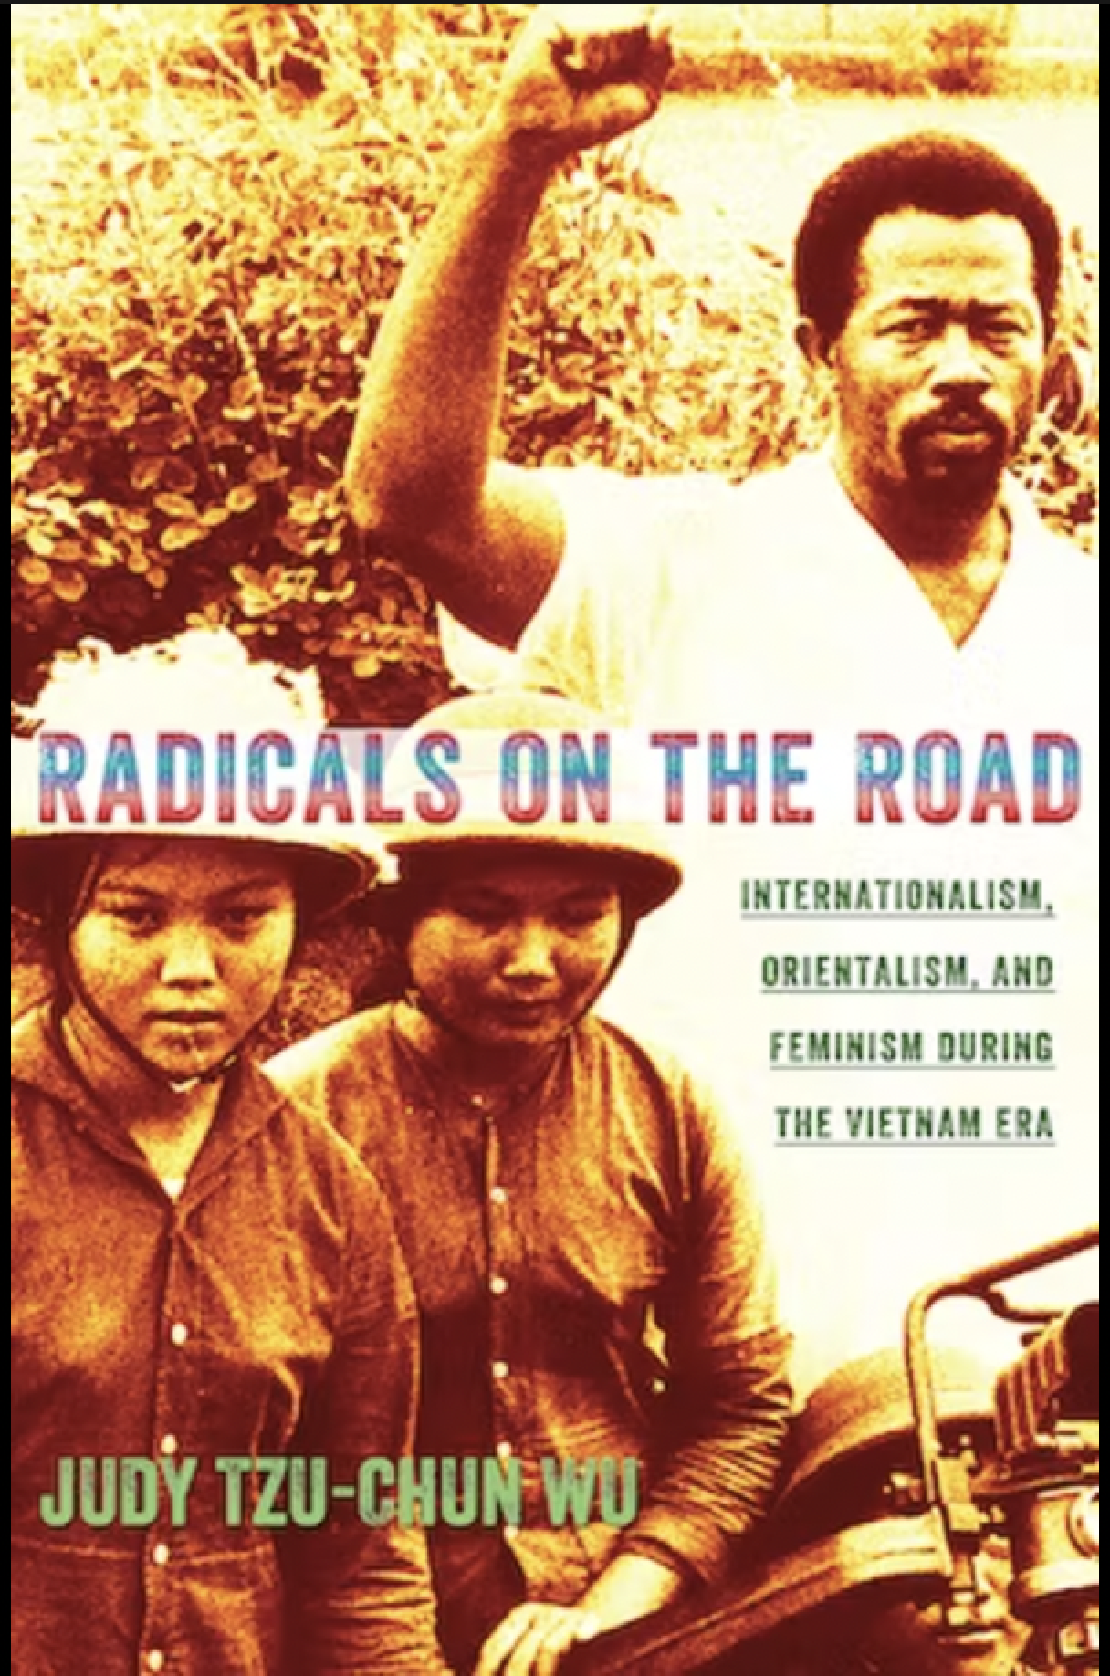 Radicals on the Road: Internationalism, Orientalism, and Feminism during the Vietnam War